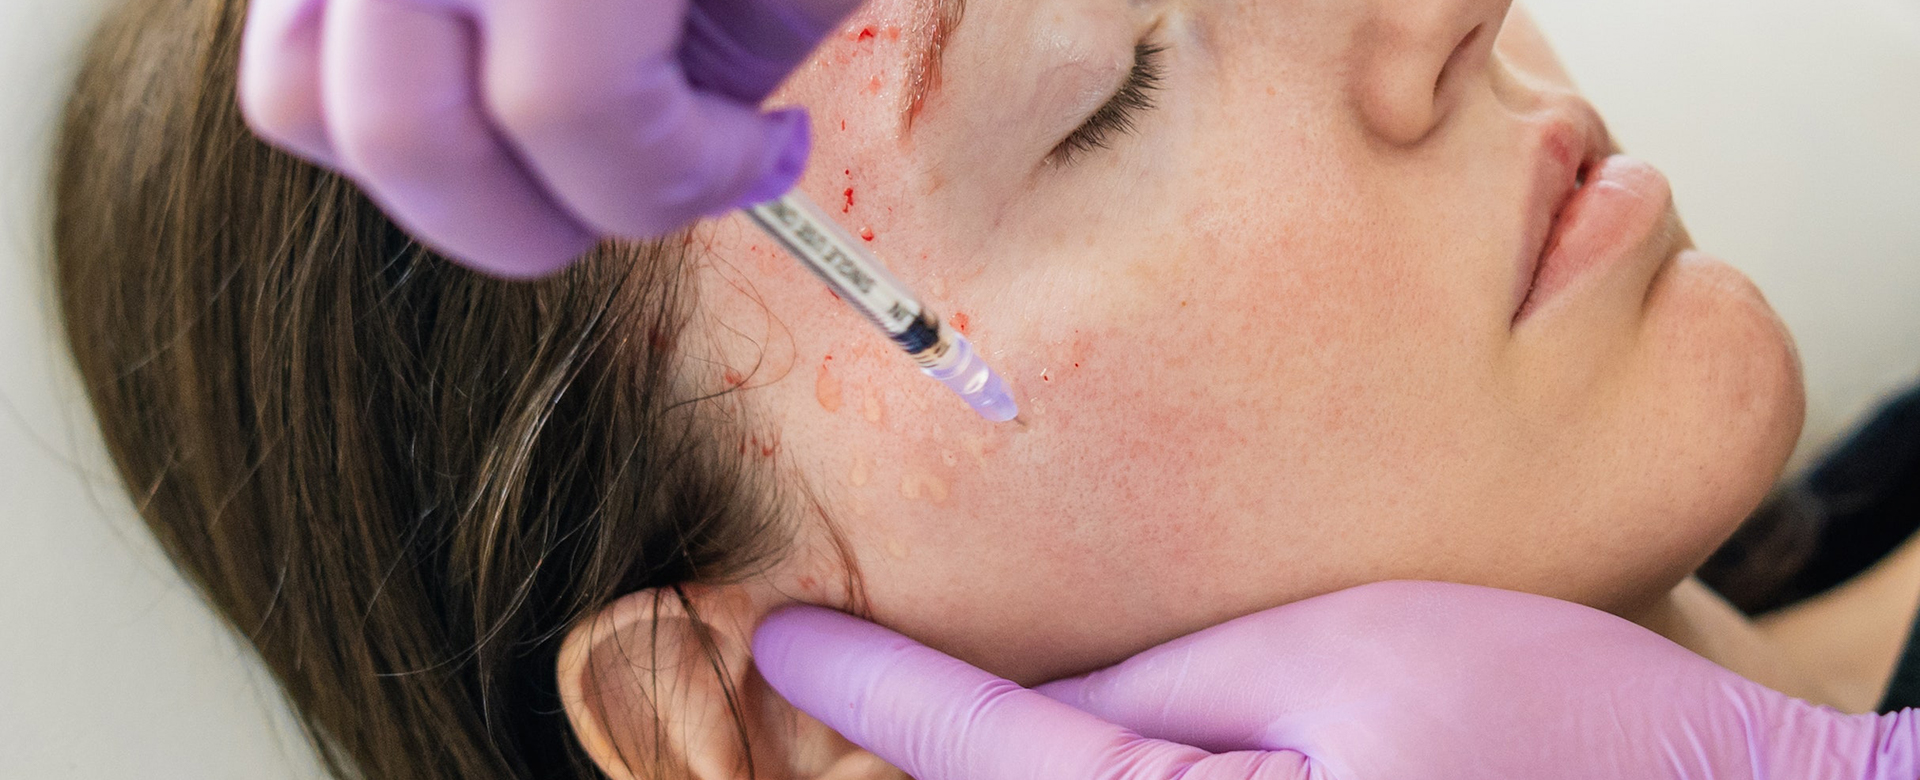 The Face Center - Vampire Facial Treatment | Aesthetic Treatments